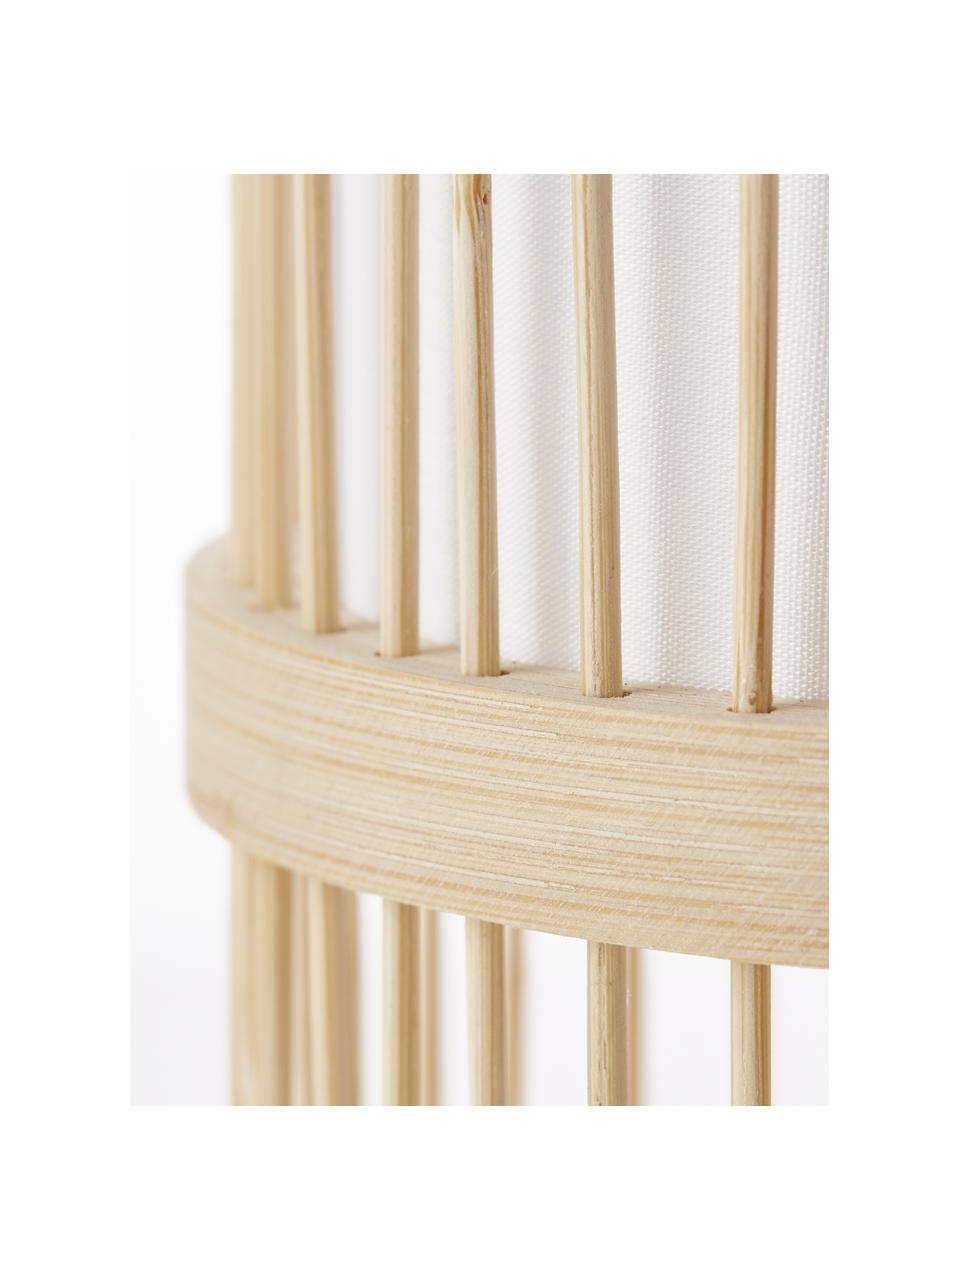 Tafellamp Nori van bamboehout, Diffuser: stof, Beige, Ø 12 x H 36 cm